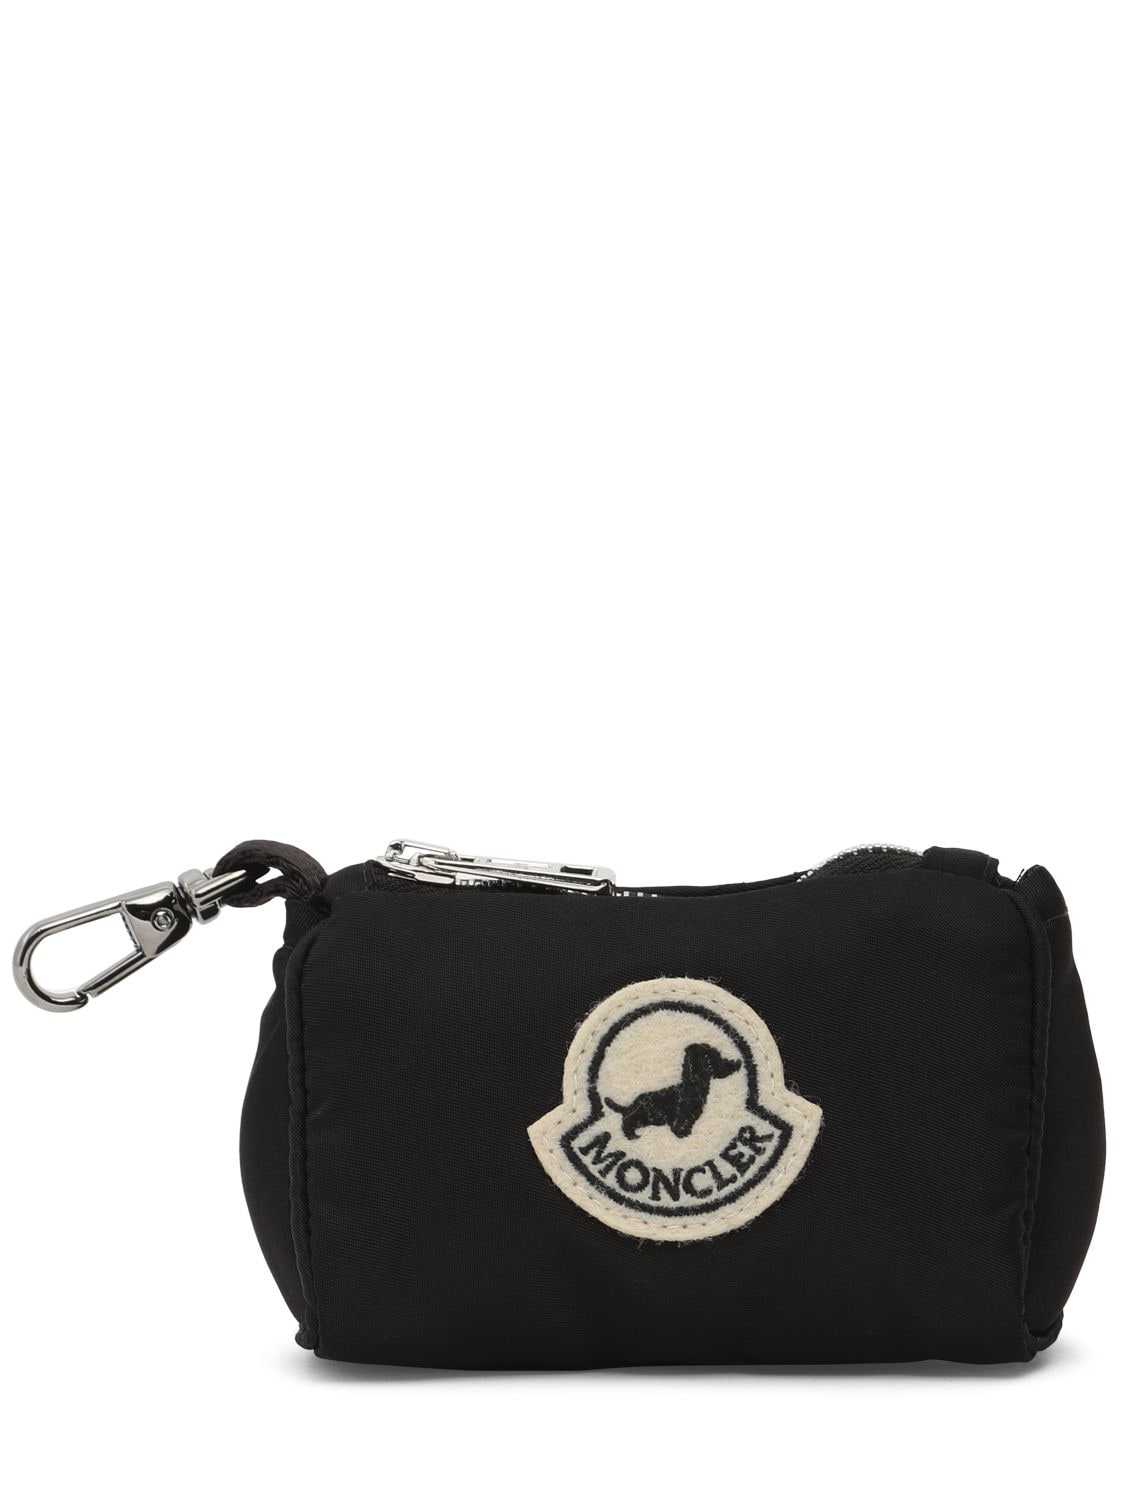 Image of Moncler X Poldo Satin Dog Bag Holder